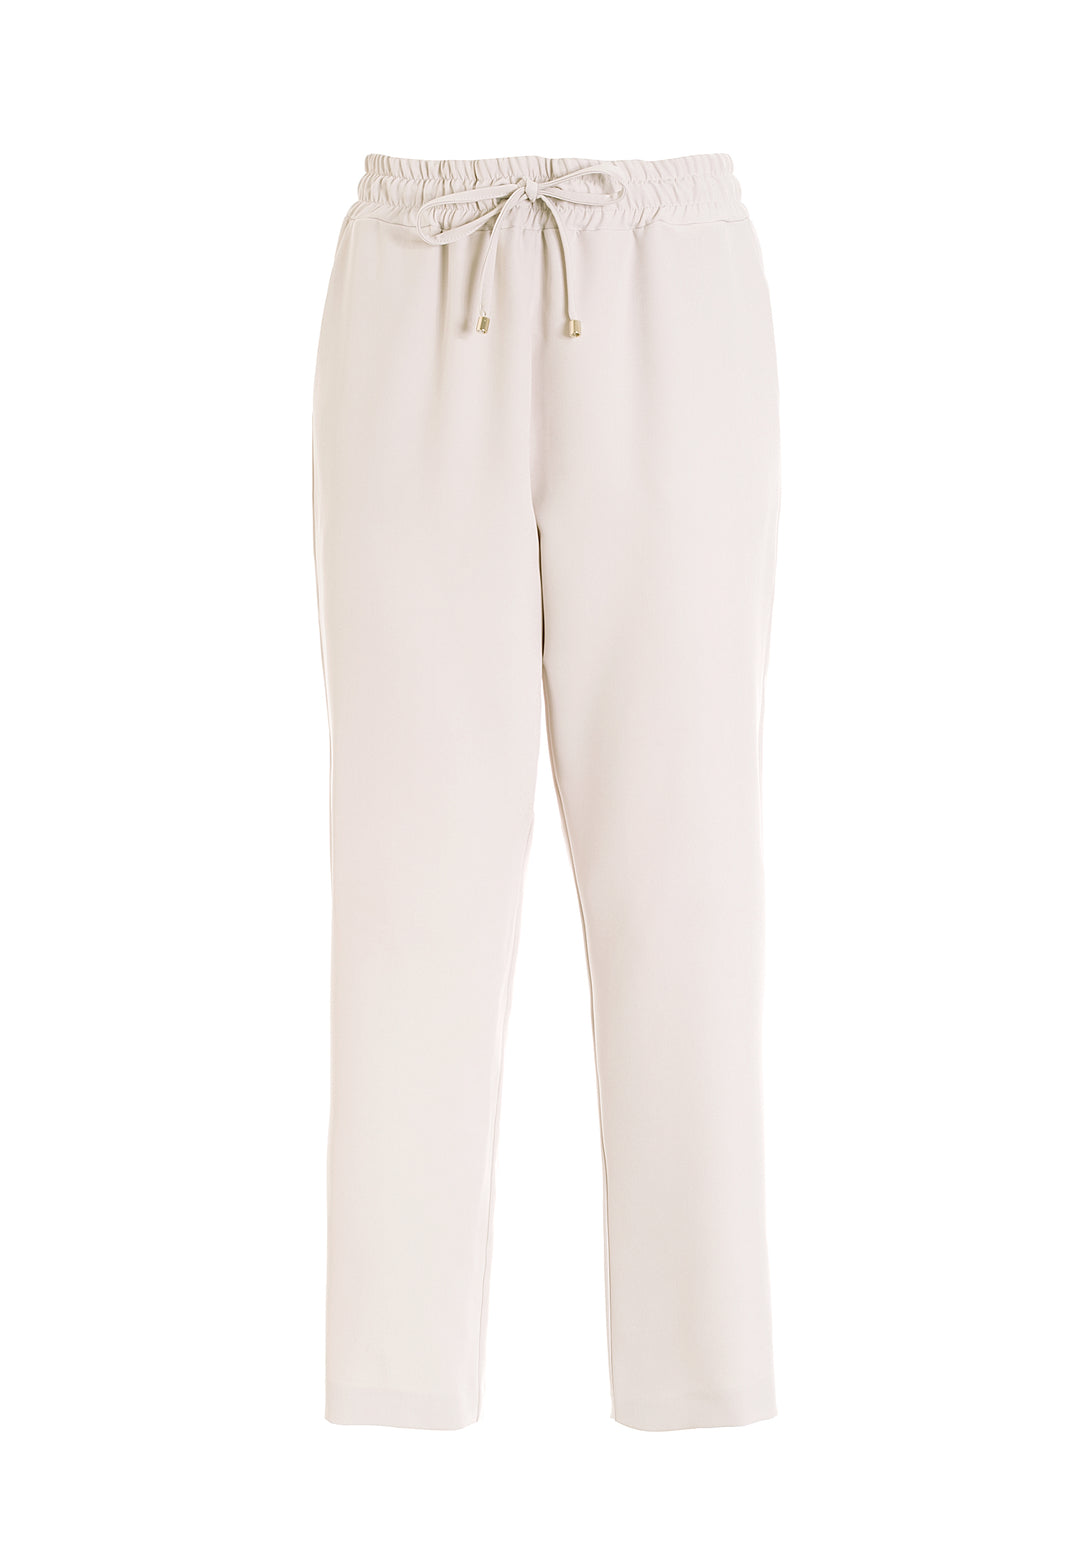 Pantalone chino regular con vita alta-FRACOMINA-FR22WV4003W42901-L38-FP-36